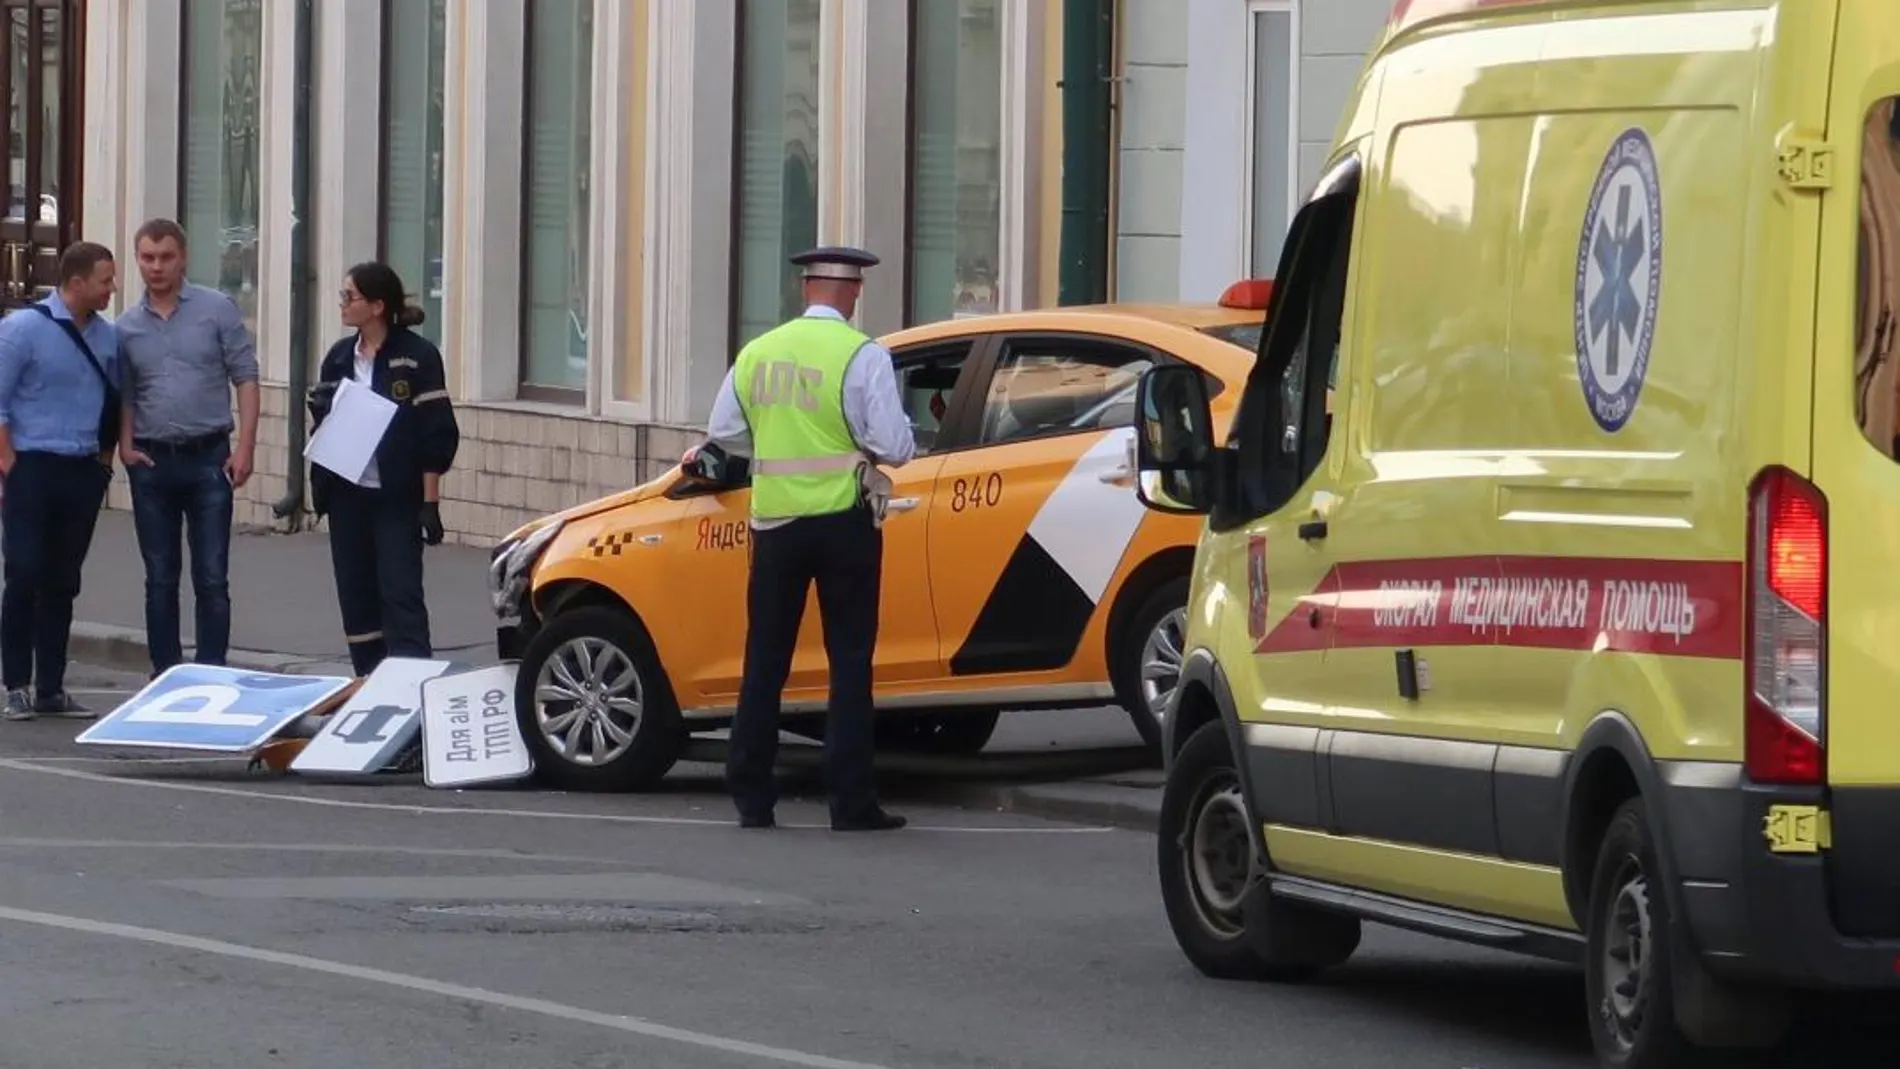 El taxi que ha arrollado al grupo de aficionados del Mundial, en una calle cercana a la Plaza Roja de Moscú / Foto: Reuters